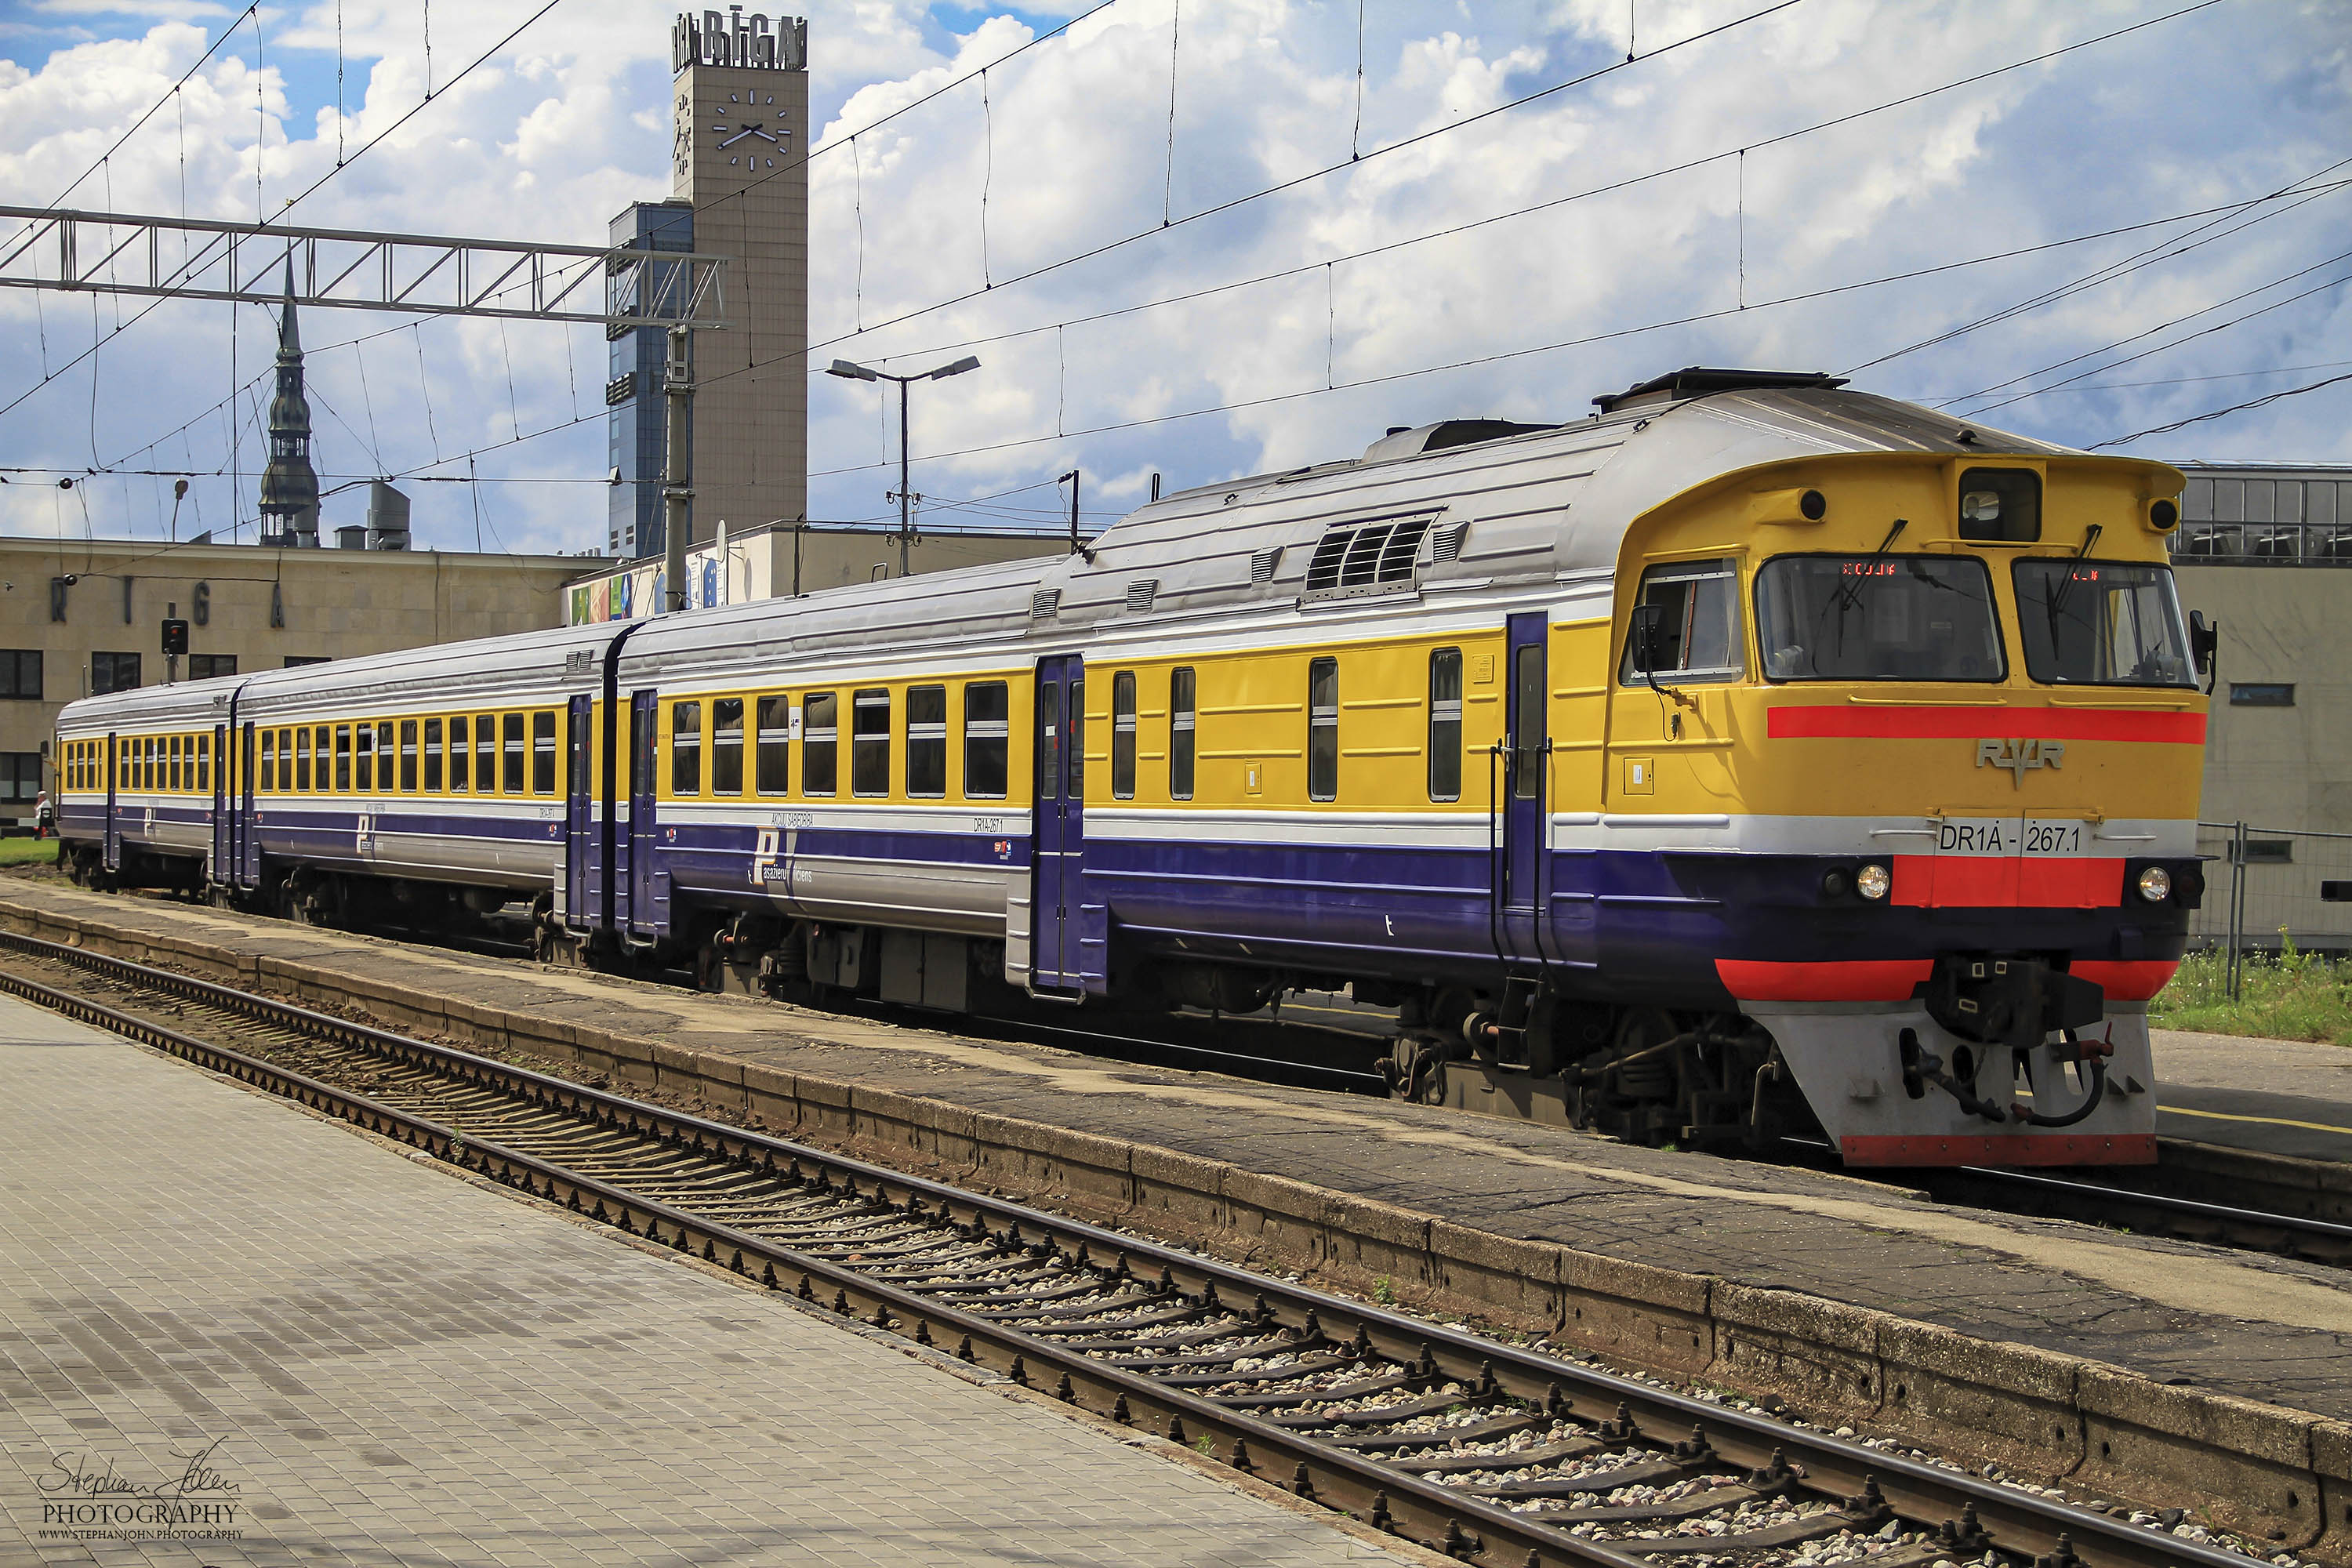 Triebwagenzug DR1A-267.1 steht abfahrtbereit in Riga Hbf